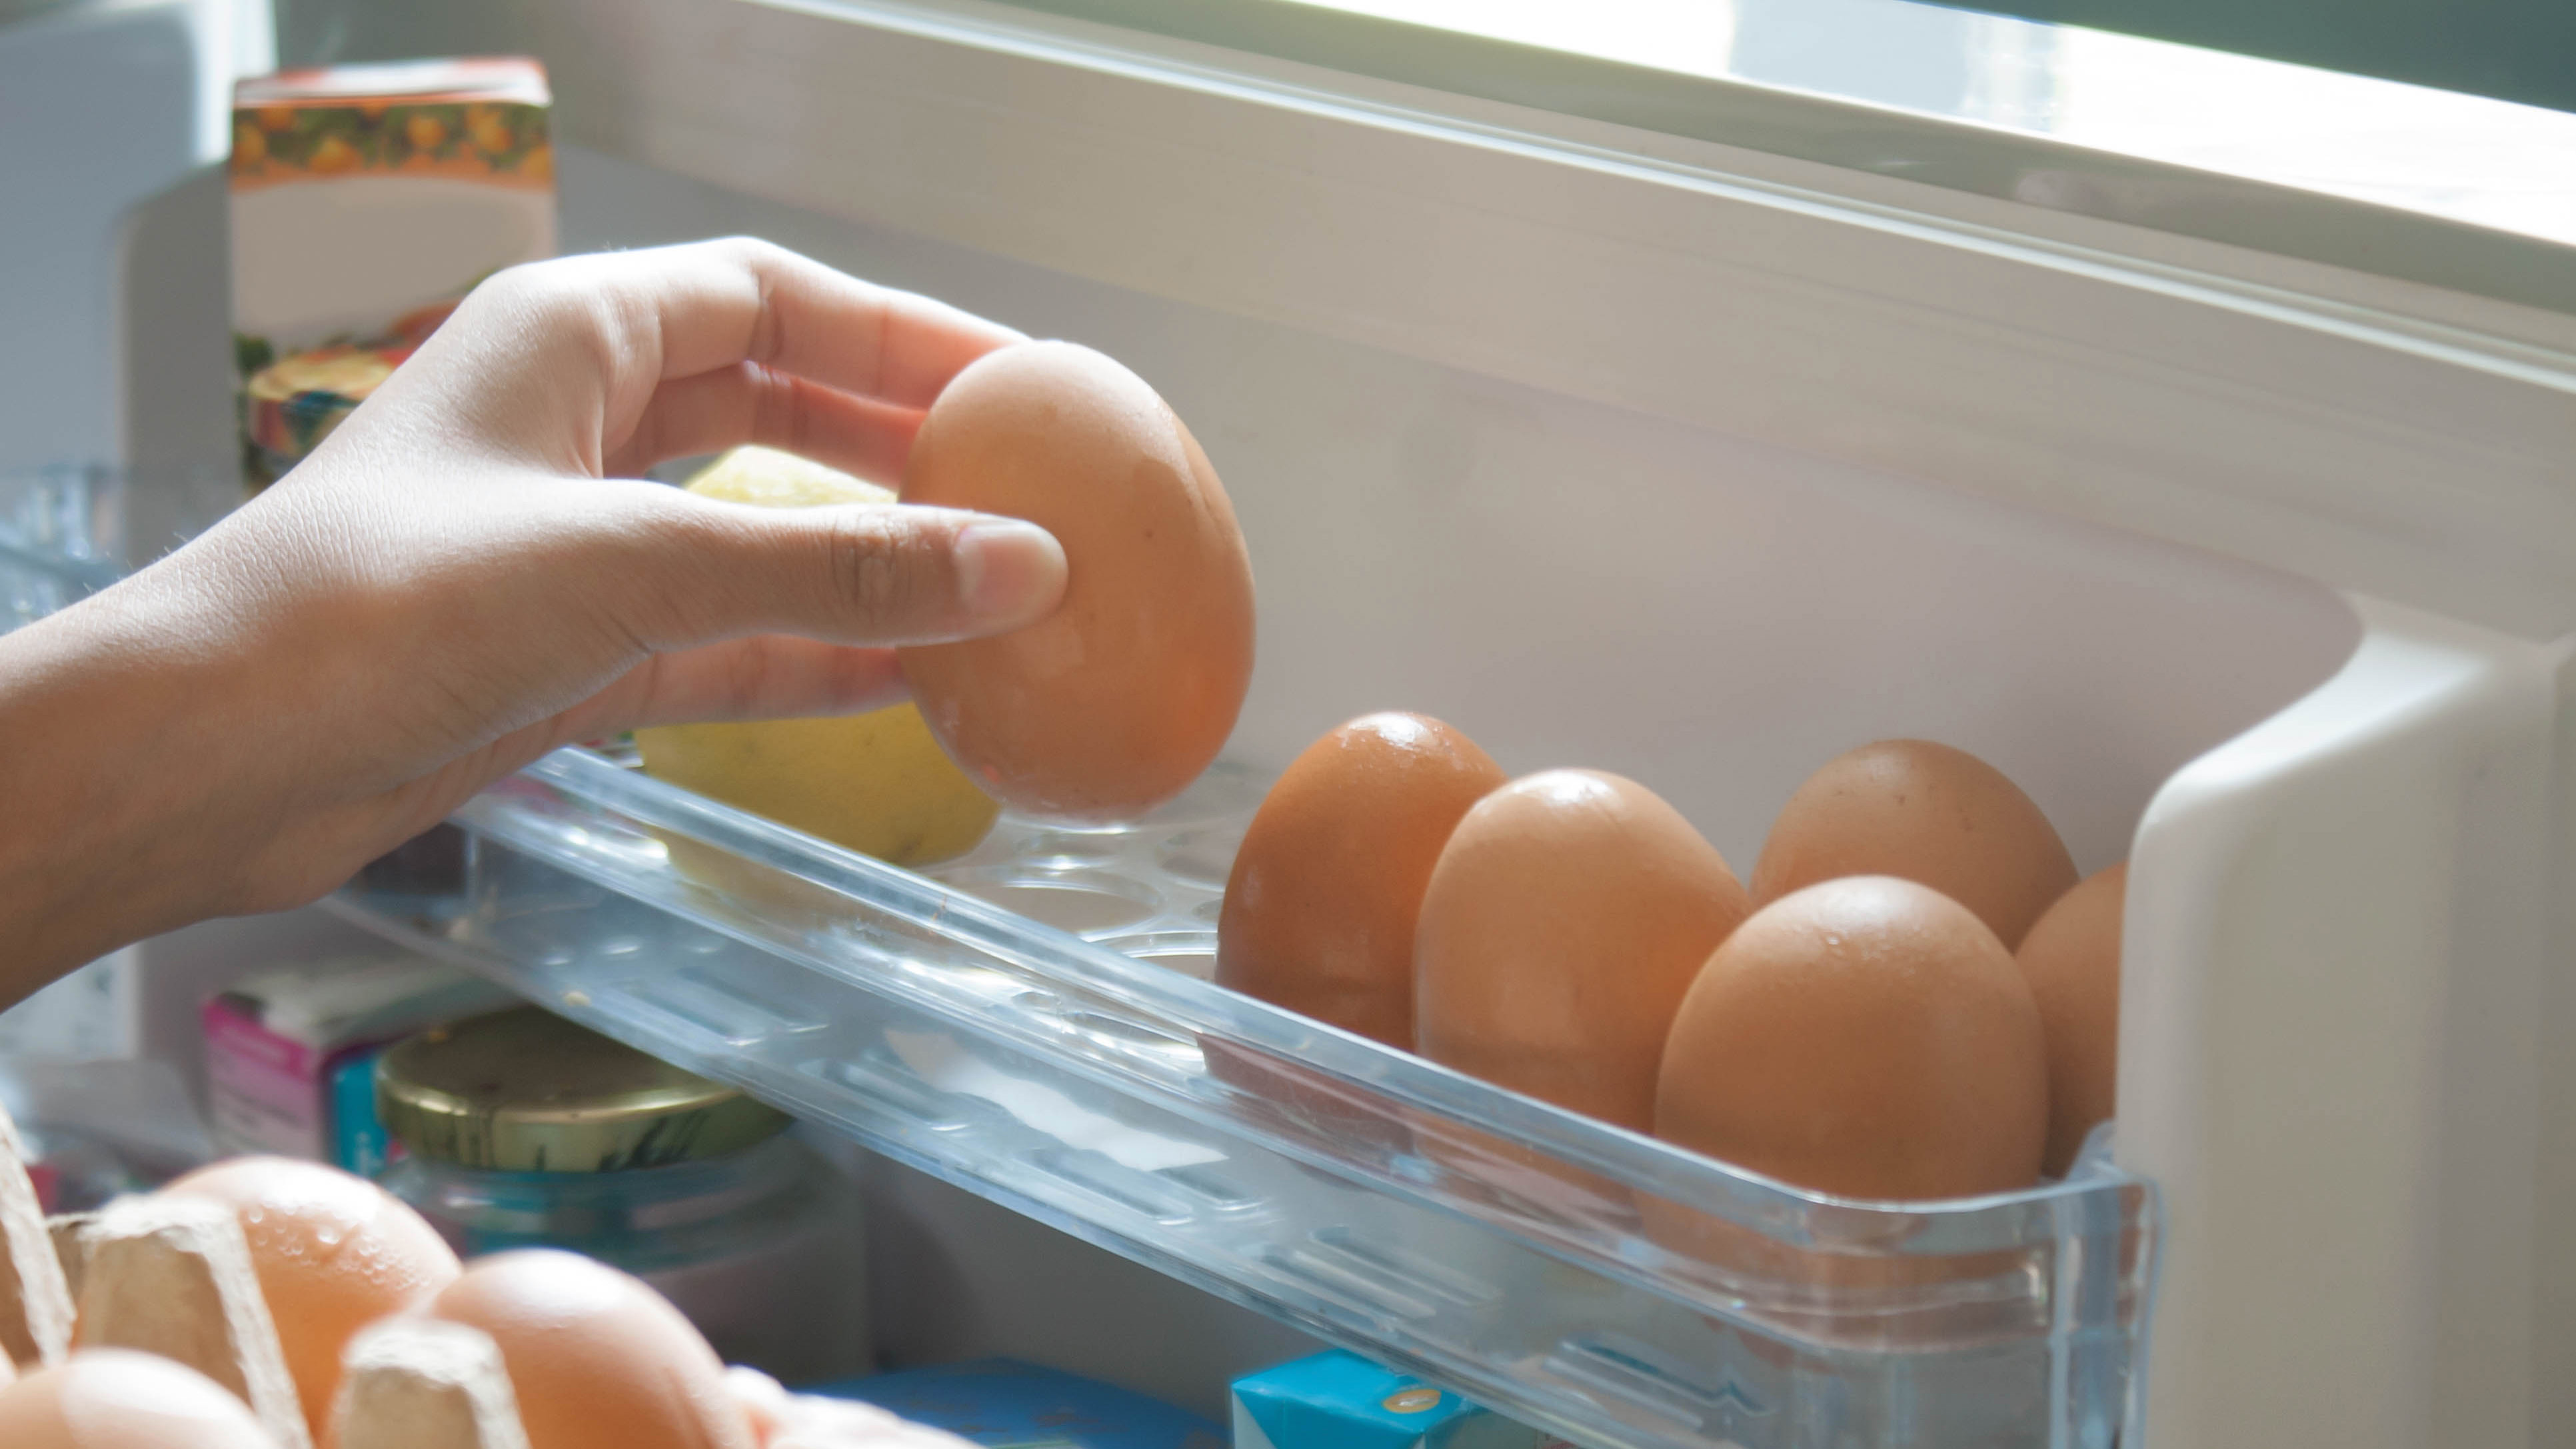 There are some eggs in the fridge. Яйца в холодильнике. Полный холодильник яиц. Трехслойная для яиц в холодильник. Пасхальные яйца в холодильнике.